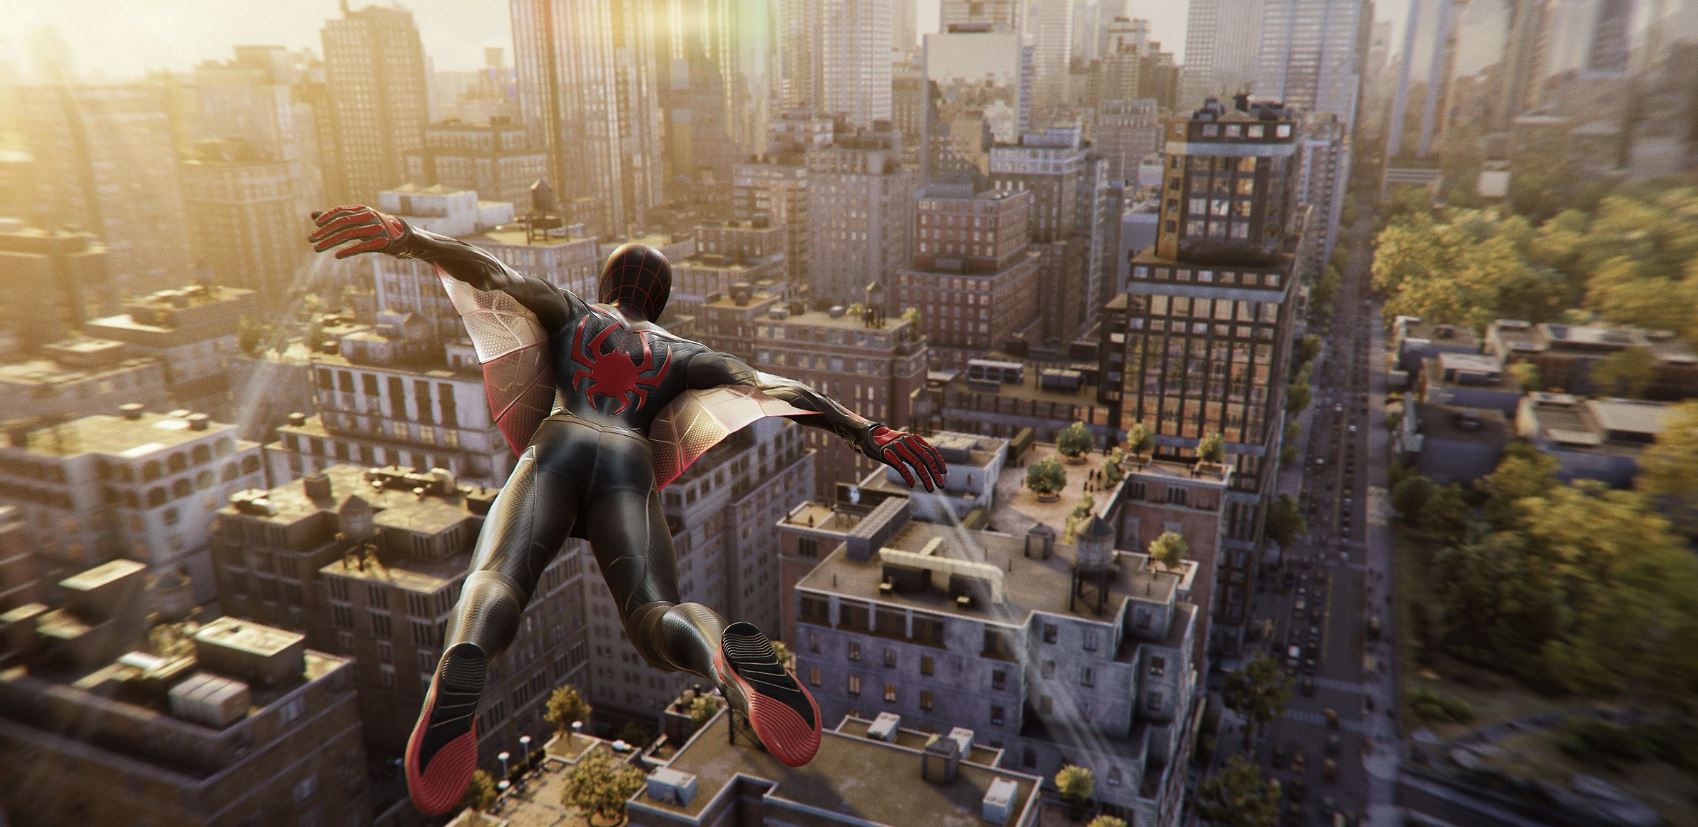 Imagine if we on multiplayer mode for Marvel's Spider-Man 2 right